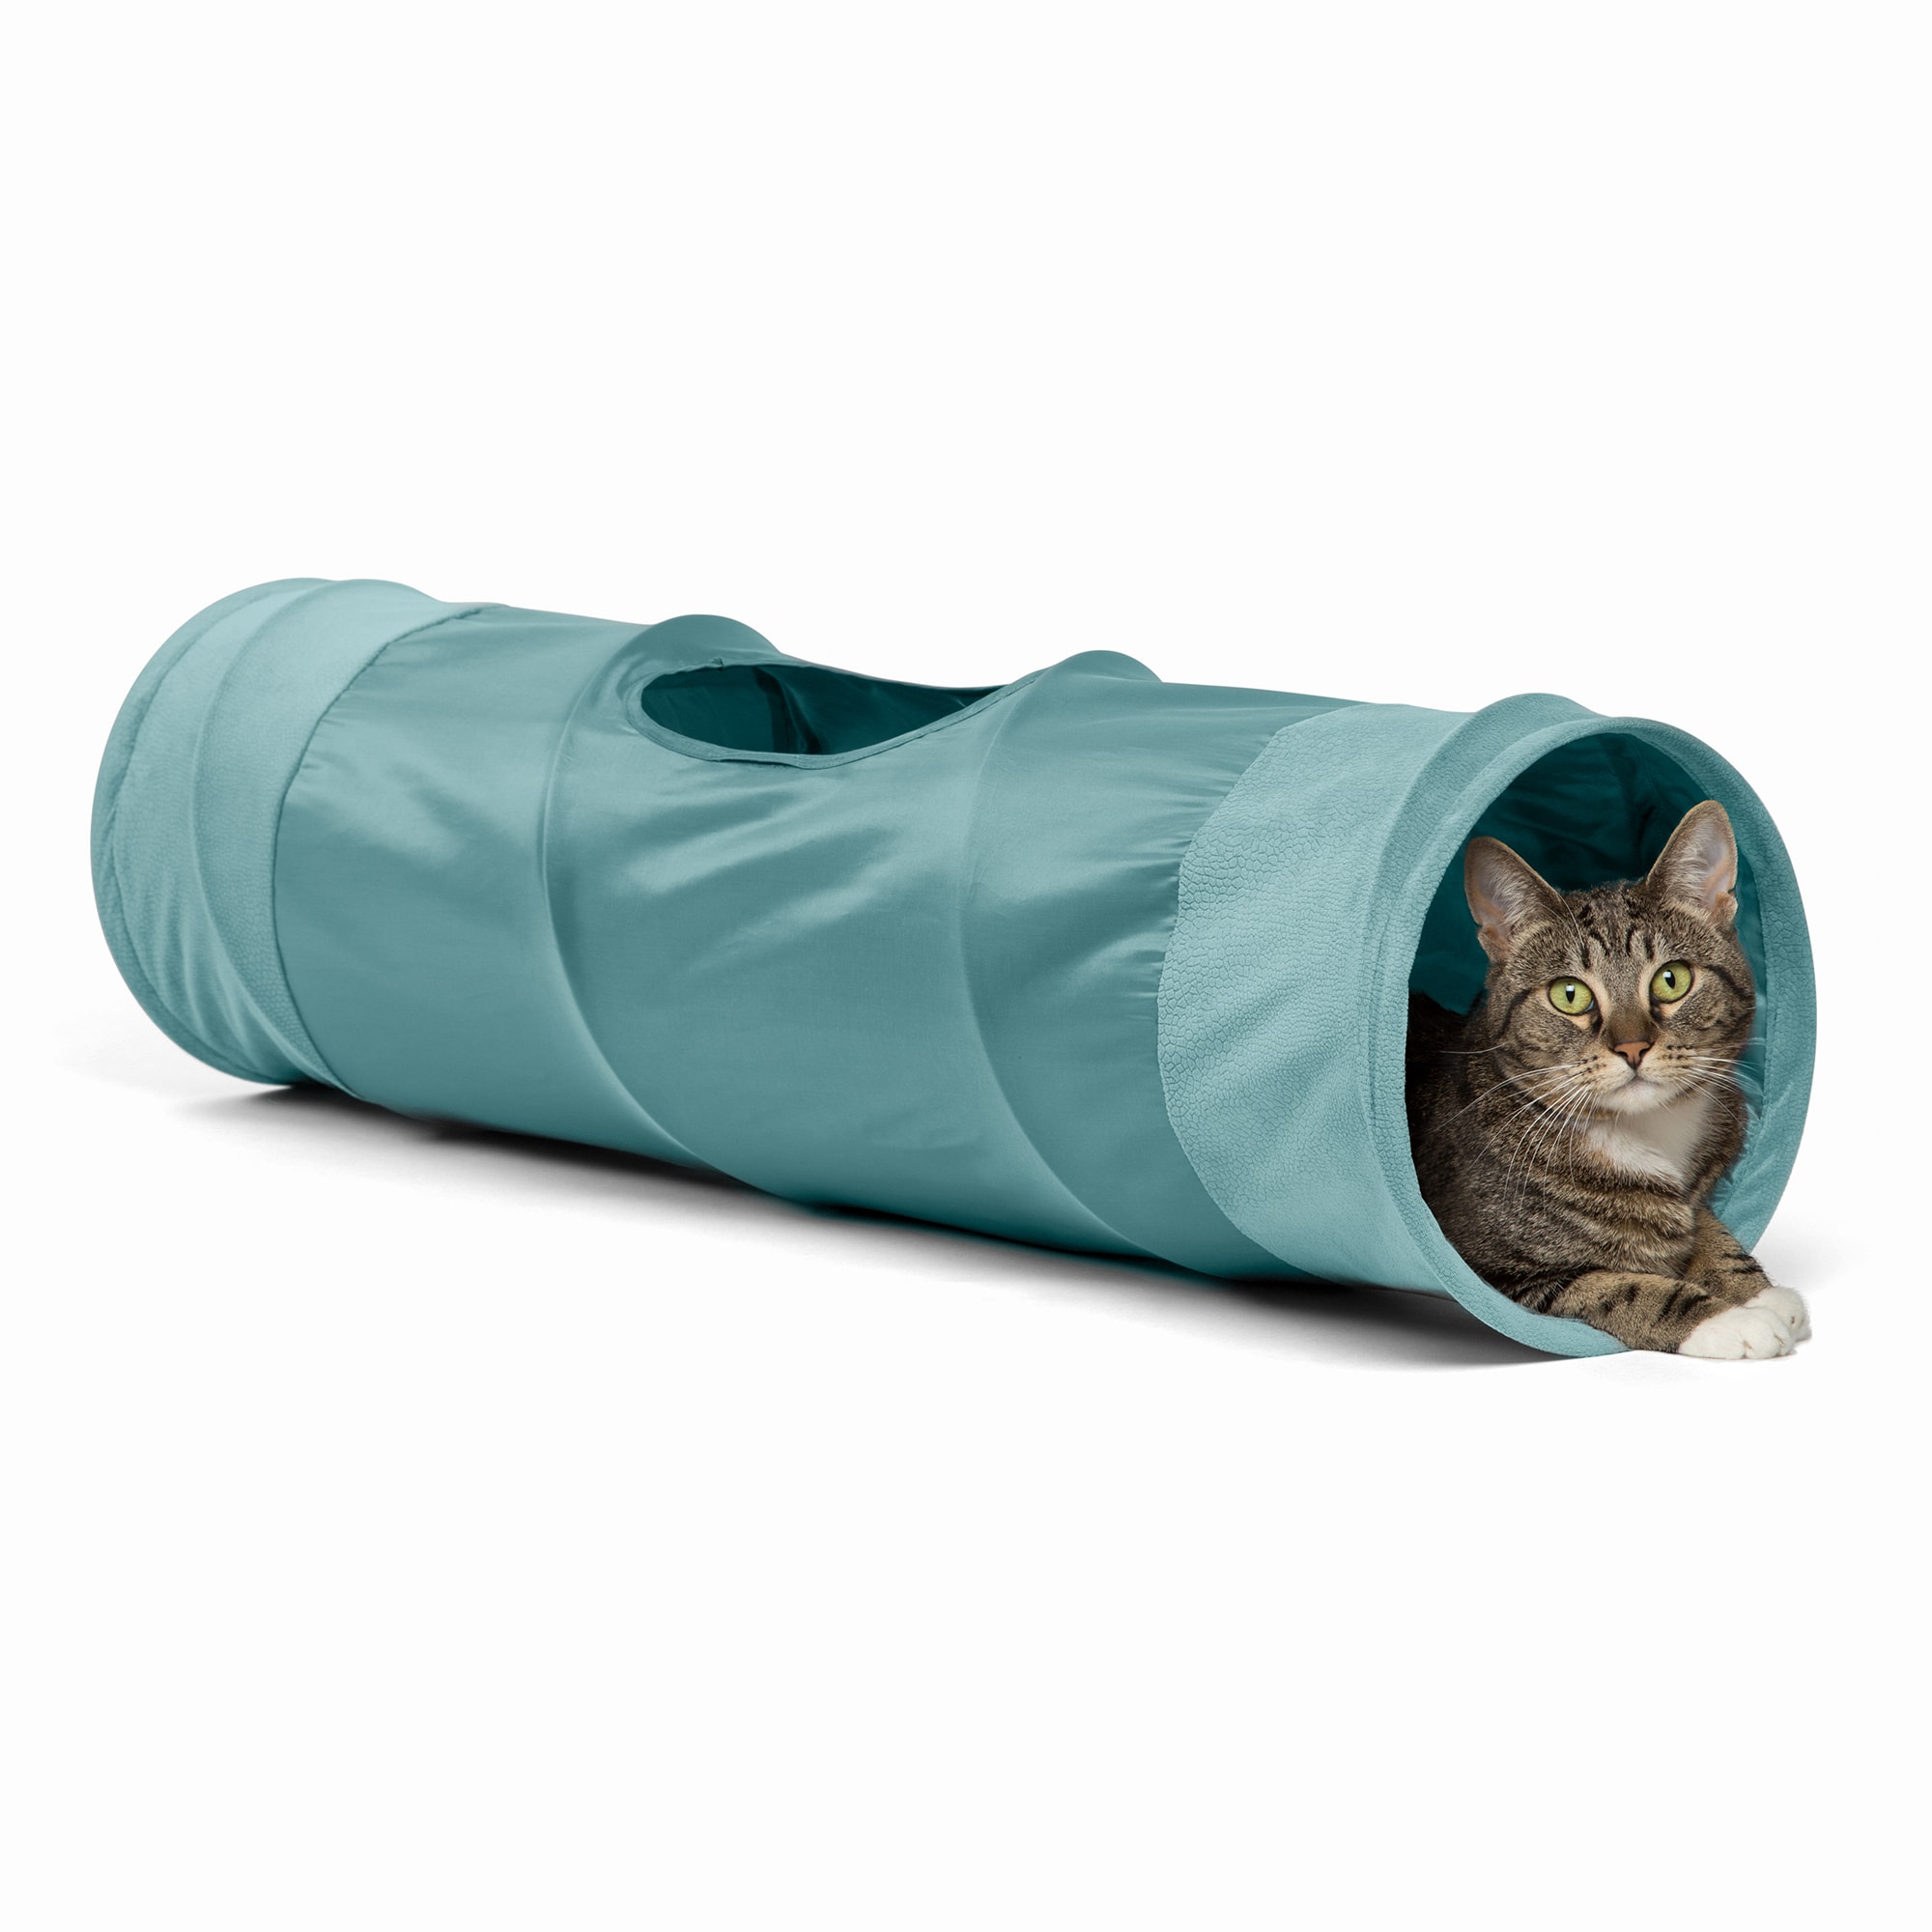 NEW Petmate Jackson Galaxy BLUE Cat Crawl Solid Tunnel Fun Toy Kitten Pets Fun! 